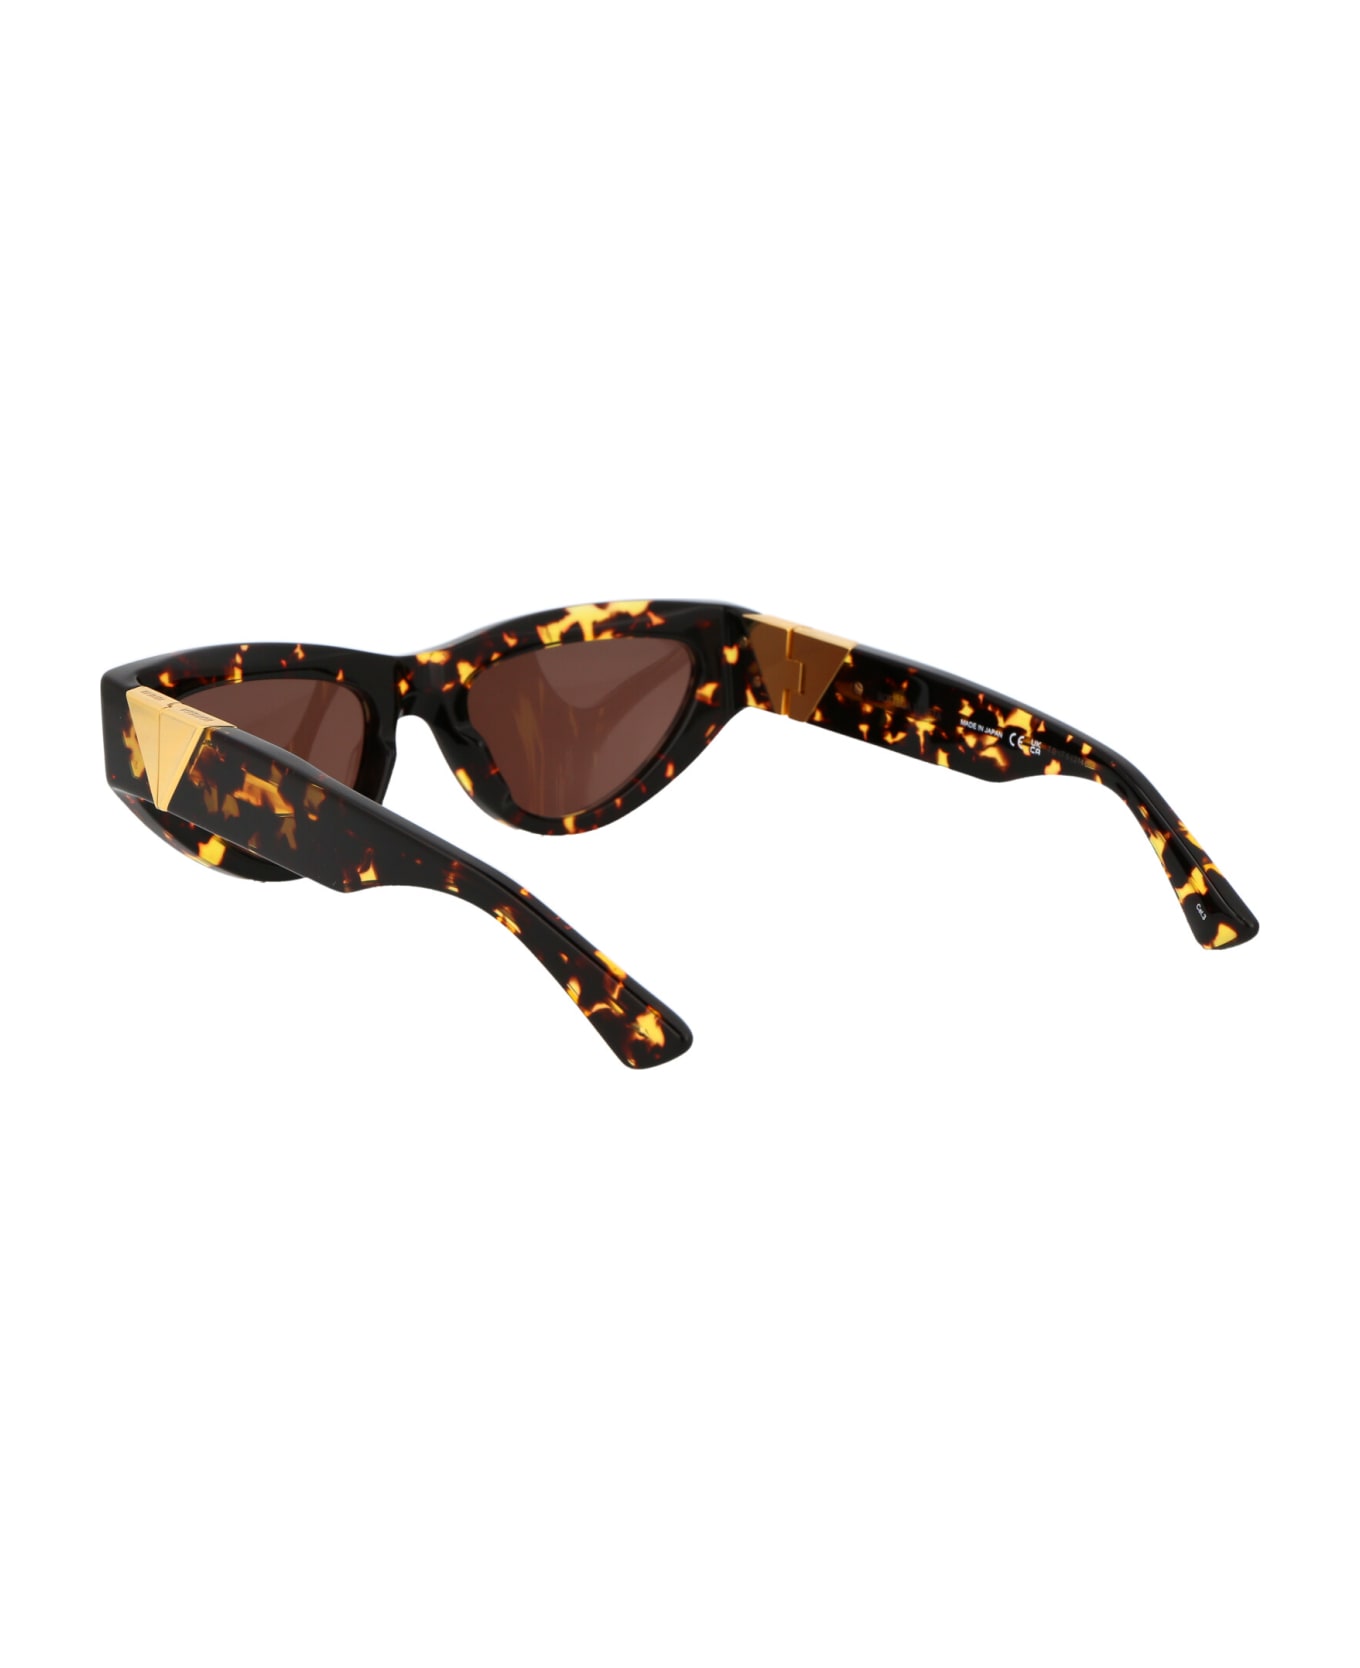 Bottega Veneta Eyewear Bv1176s Sunglasses - 002 HAVANA HAVANA BROWN